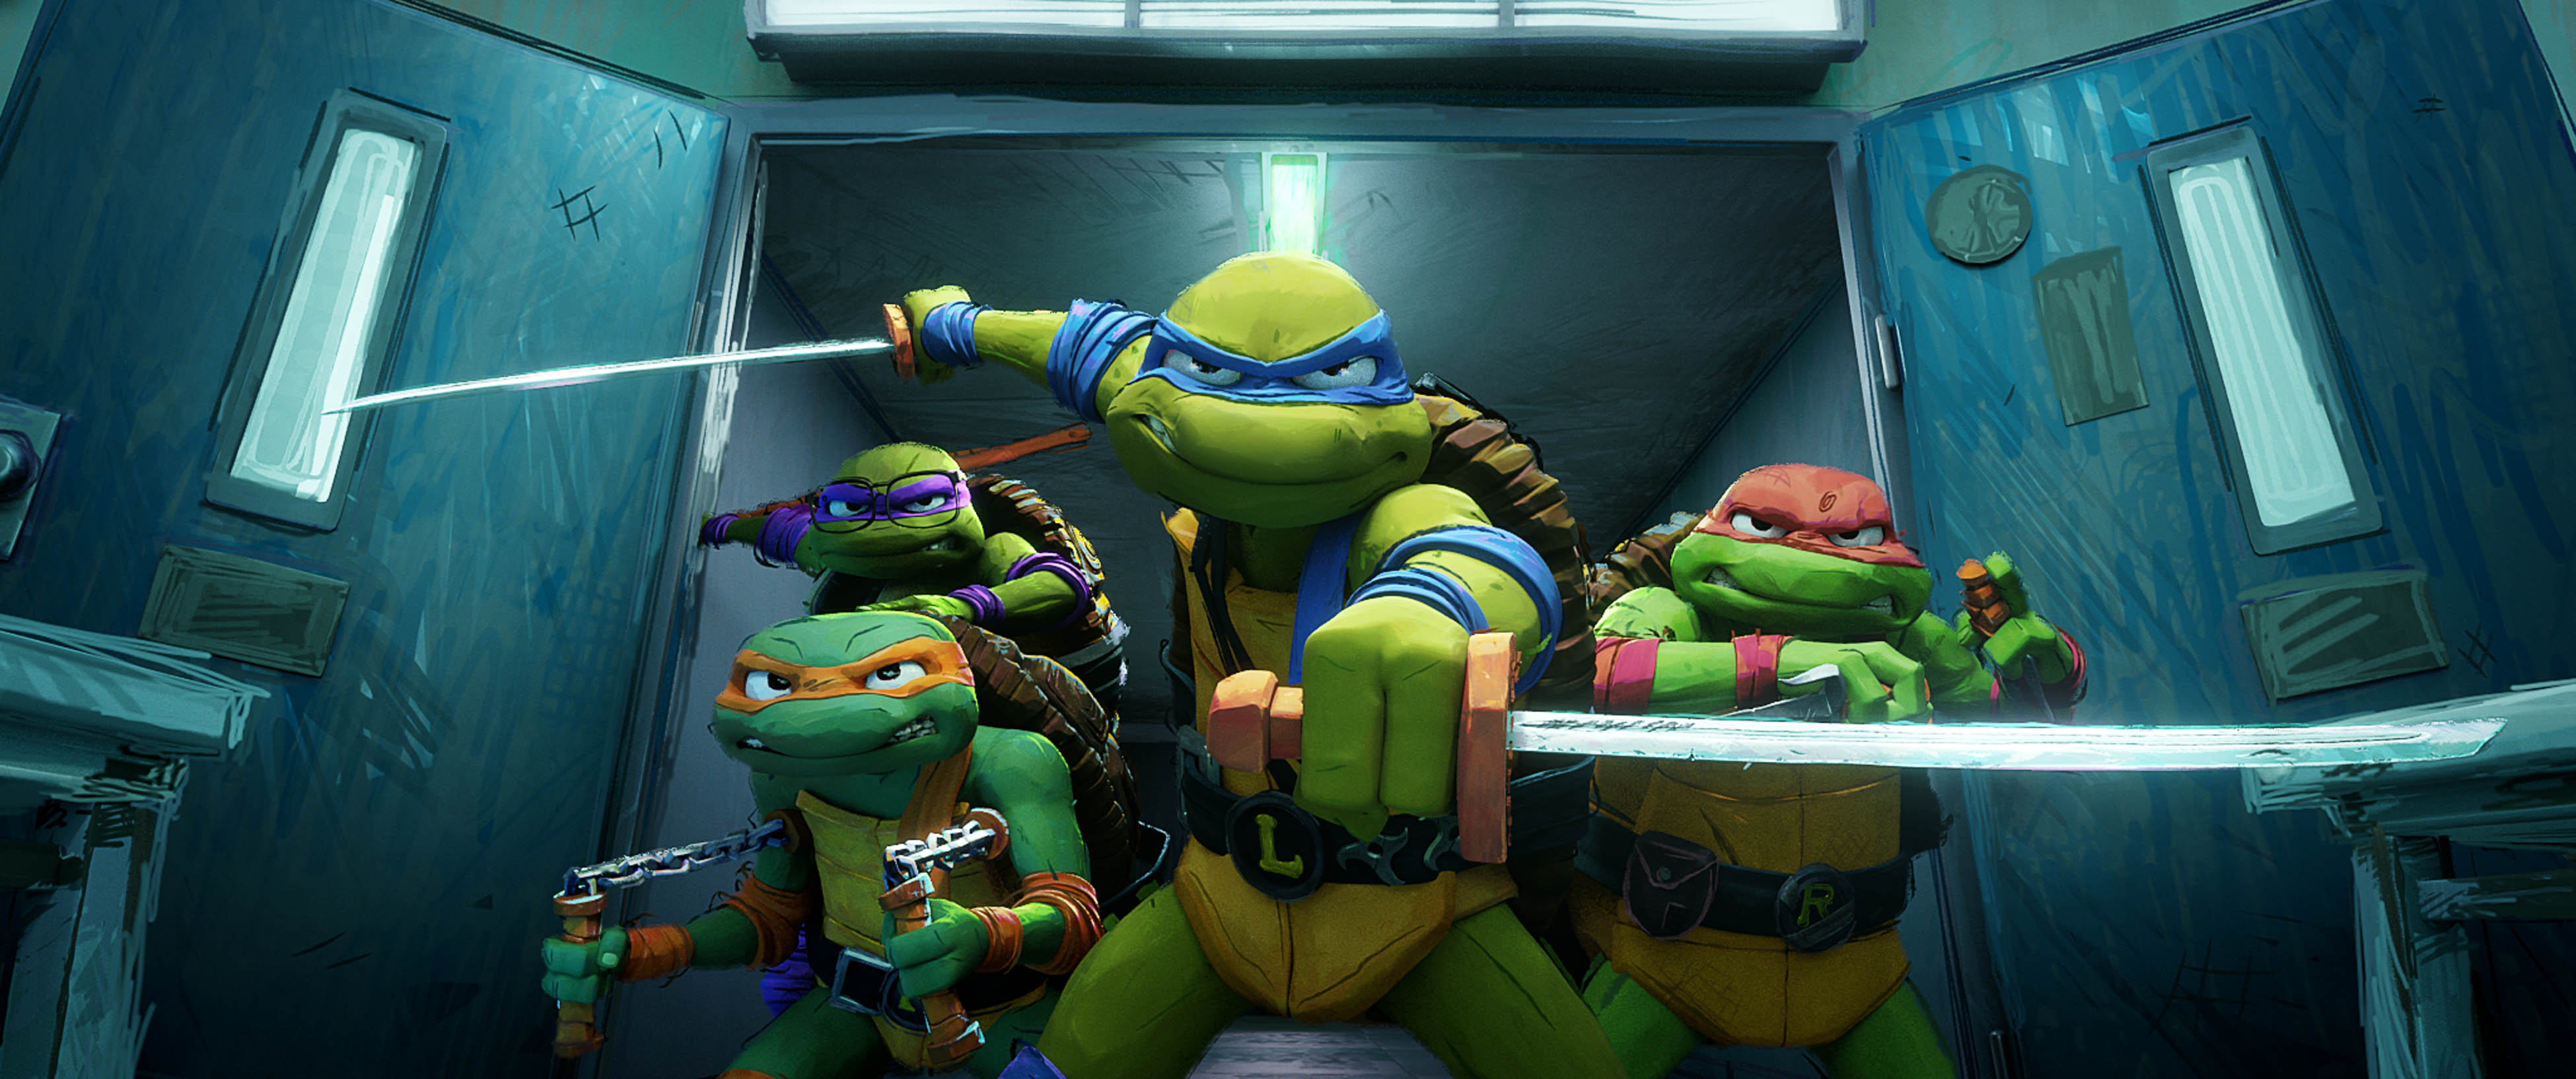 L-r, Donatello, Michelangelo, Leonard, and Raphael brandish their ninja weapons and pose dramatically as they leap through a set of double doors in Teenage Mutant Ninja Turtles: Mutant Mayhem.